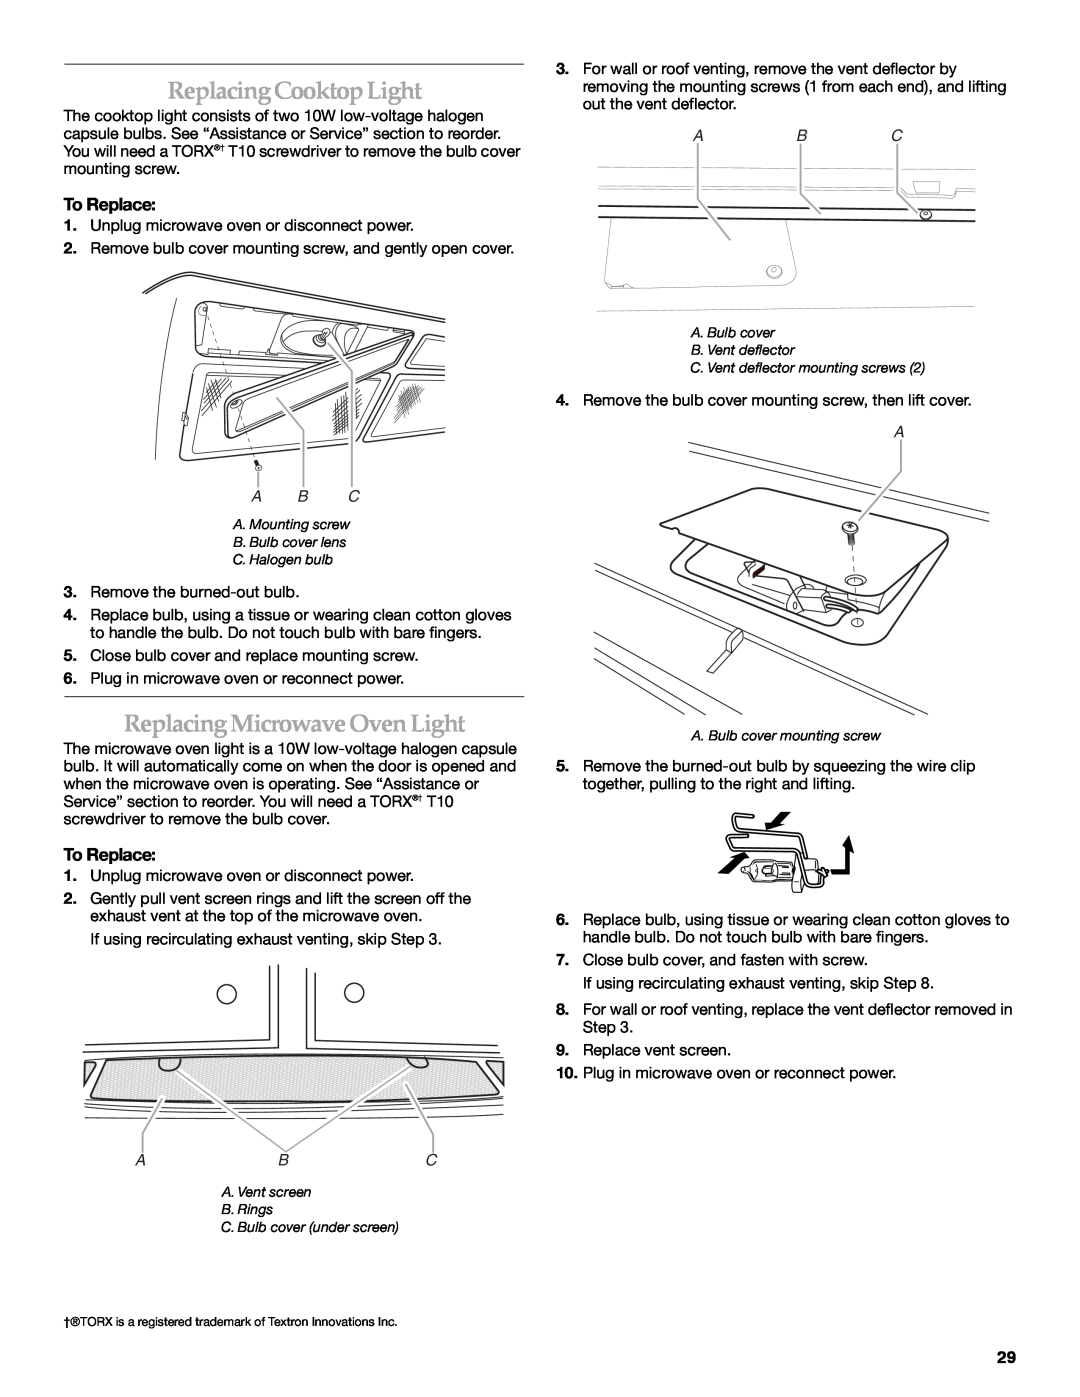 KitchenAid KHMS2056SBL manual ReplacingCooktopLight, ReplacingMicrowaveOvenLight, A B C, A. Bulb cover mounting screw 